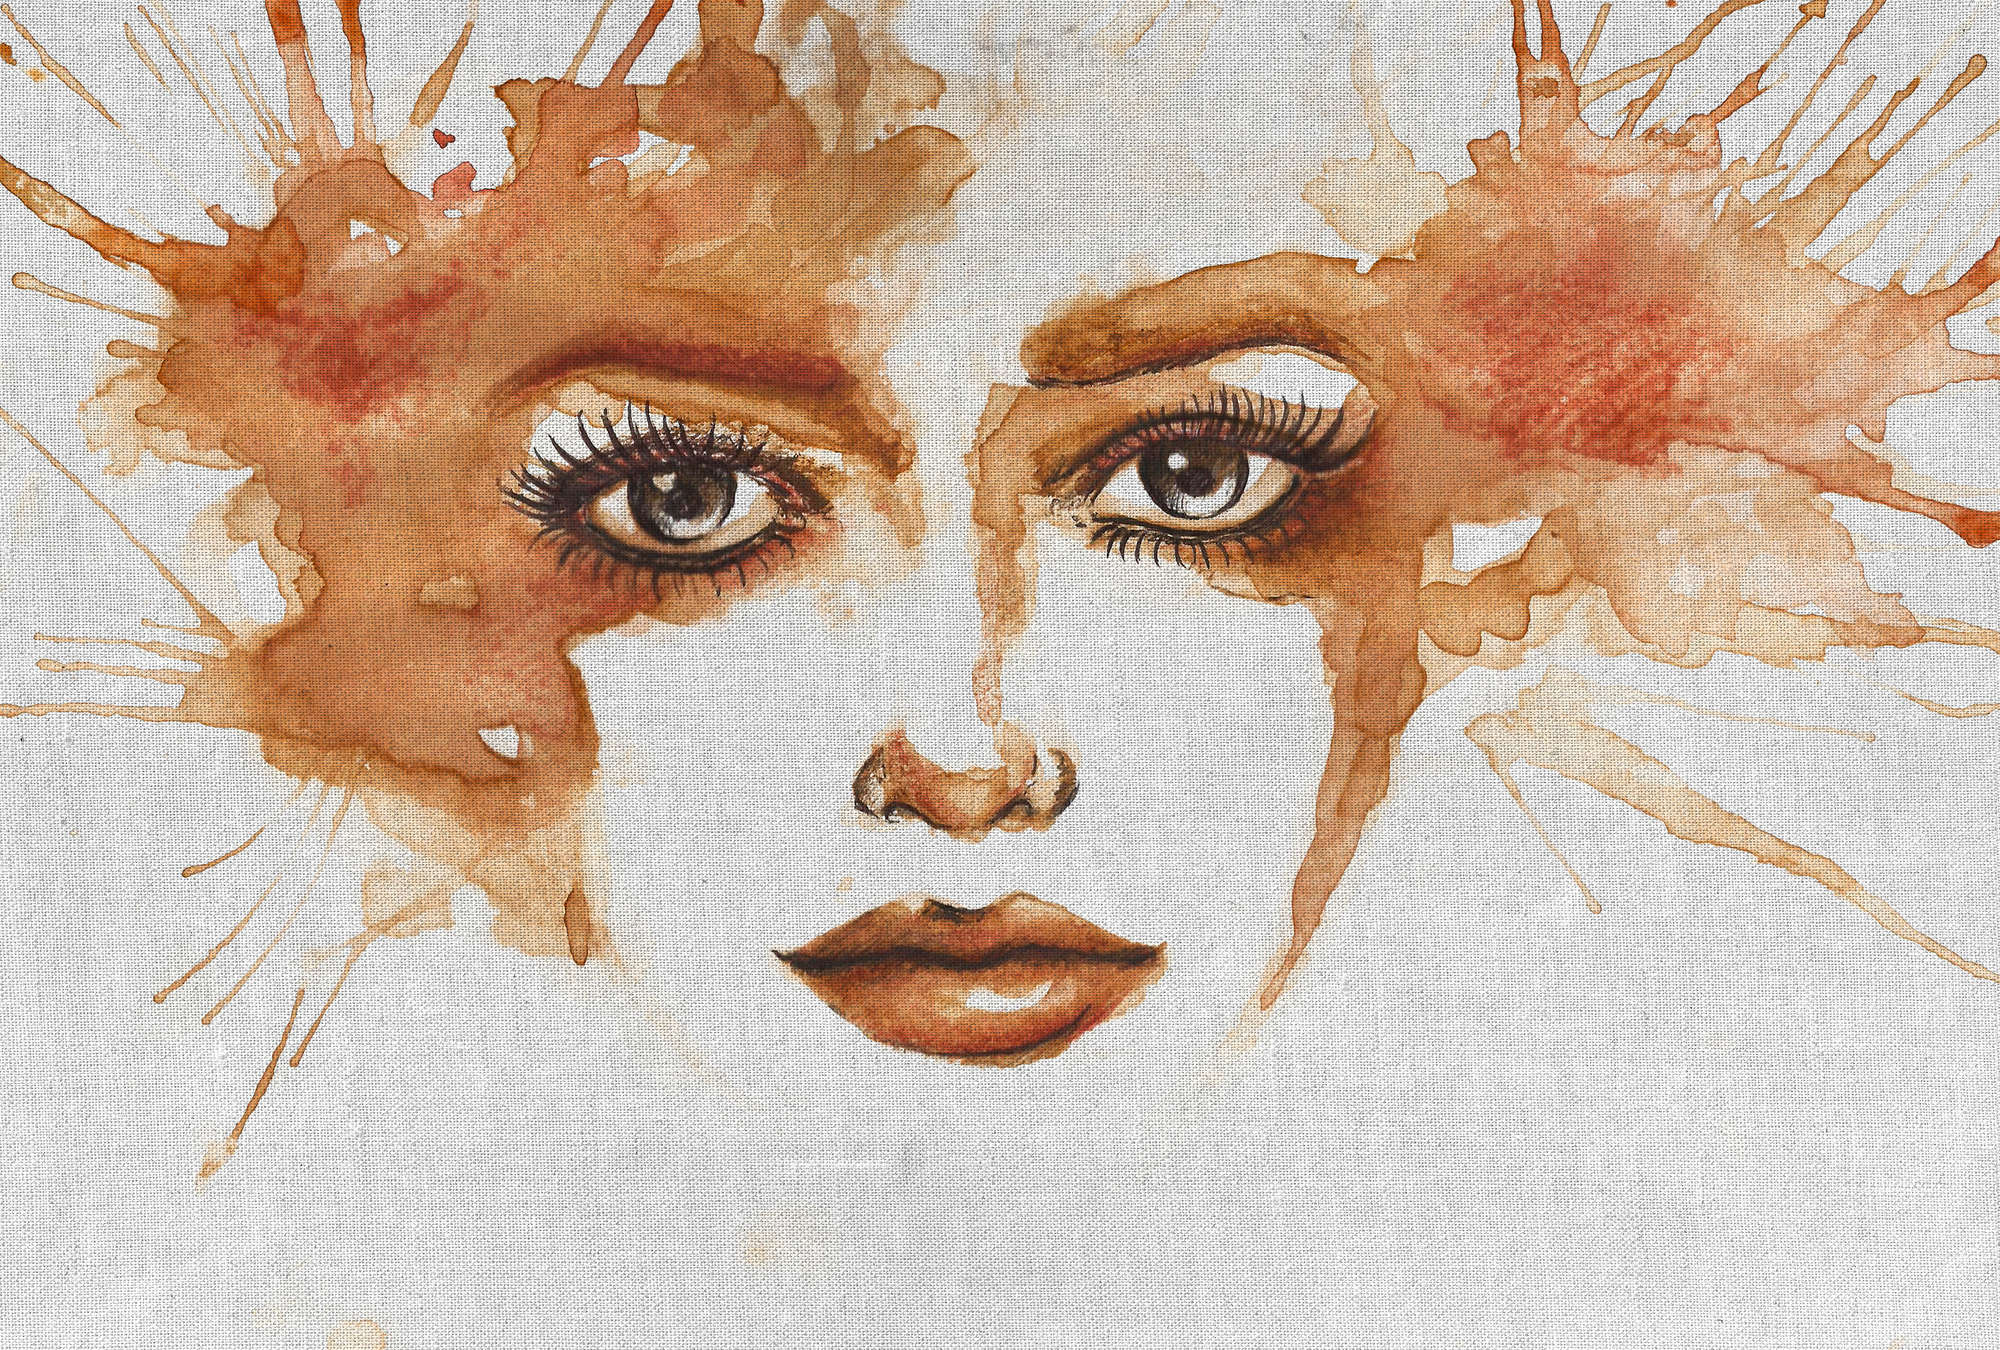             Art mural watercolour & woman face - orange
        